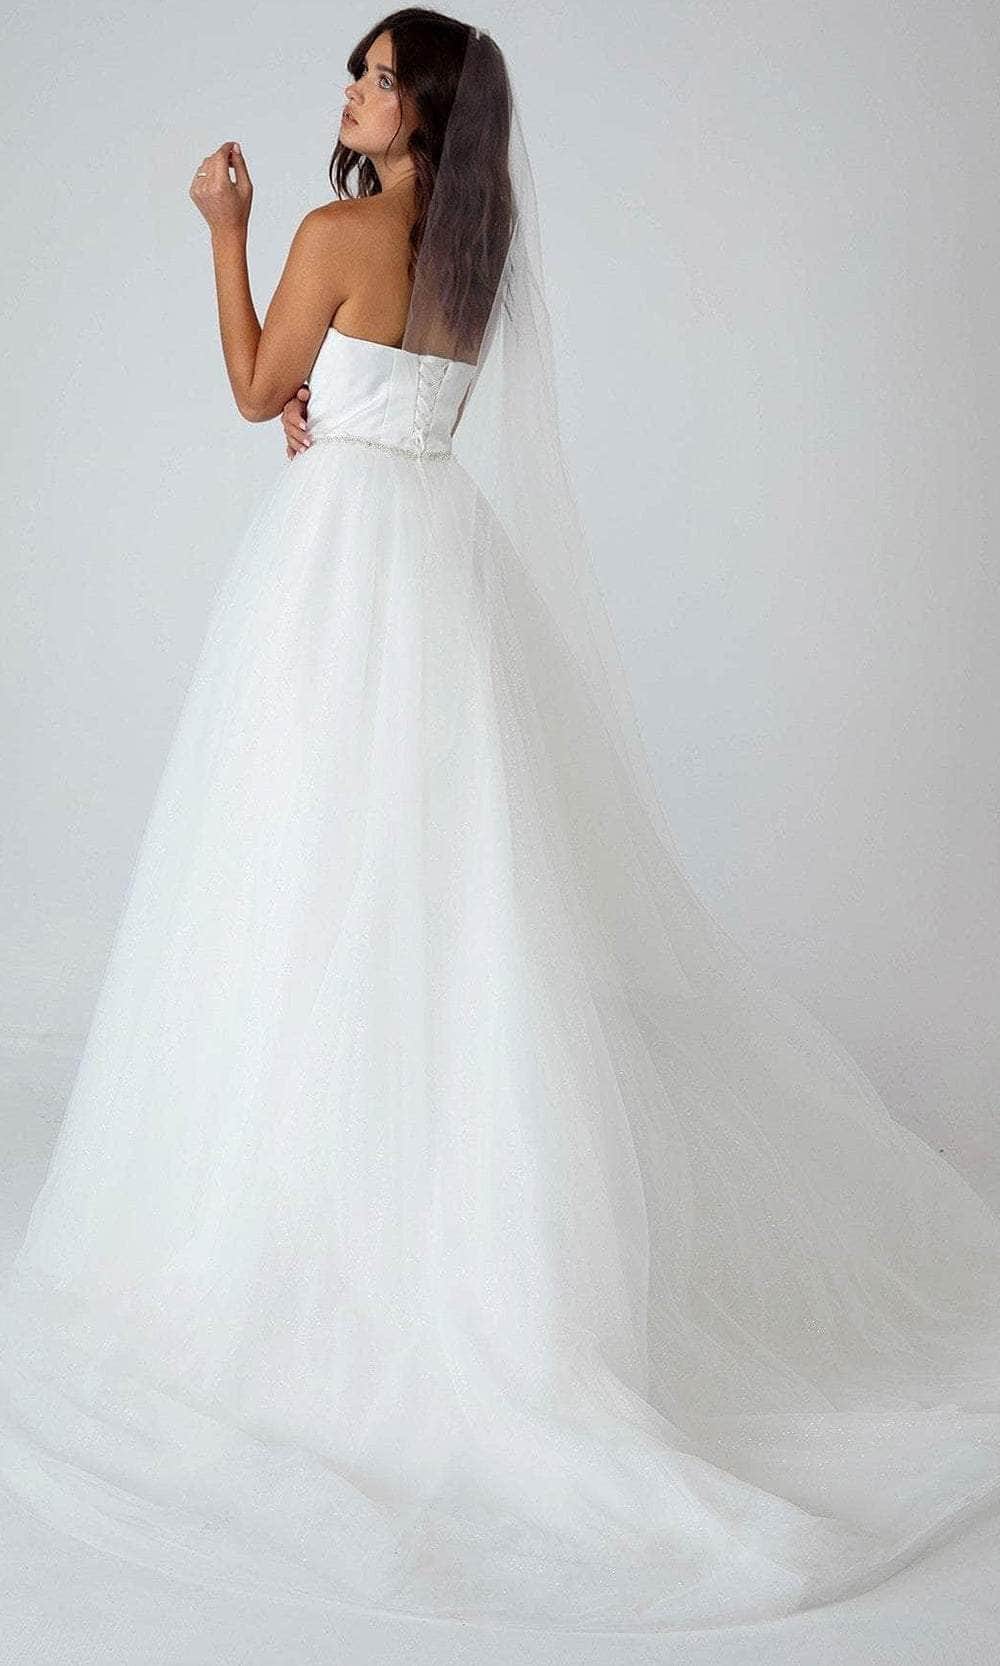 Eureka Fashion 9515 - Strapless Sweetheart Wedding Gown Wedding Dresses